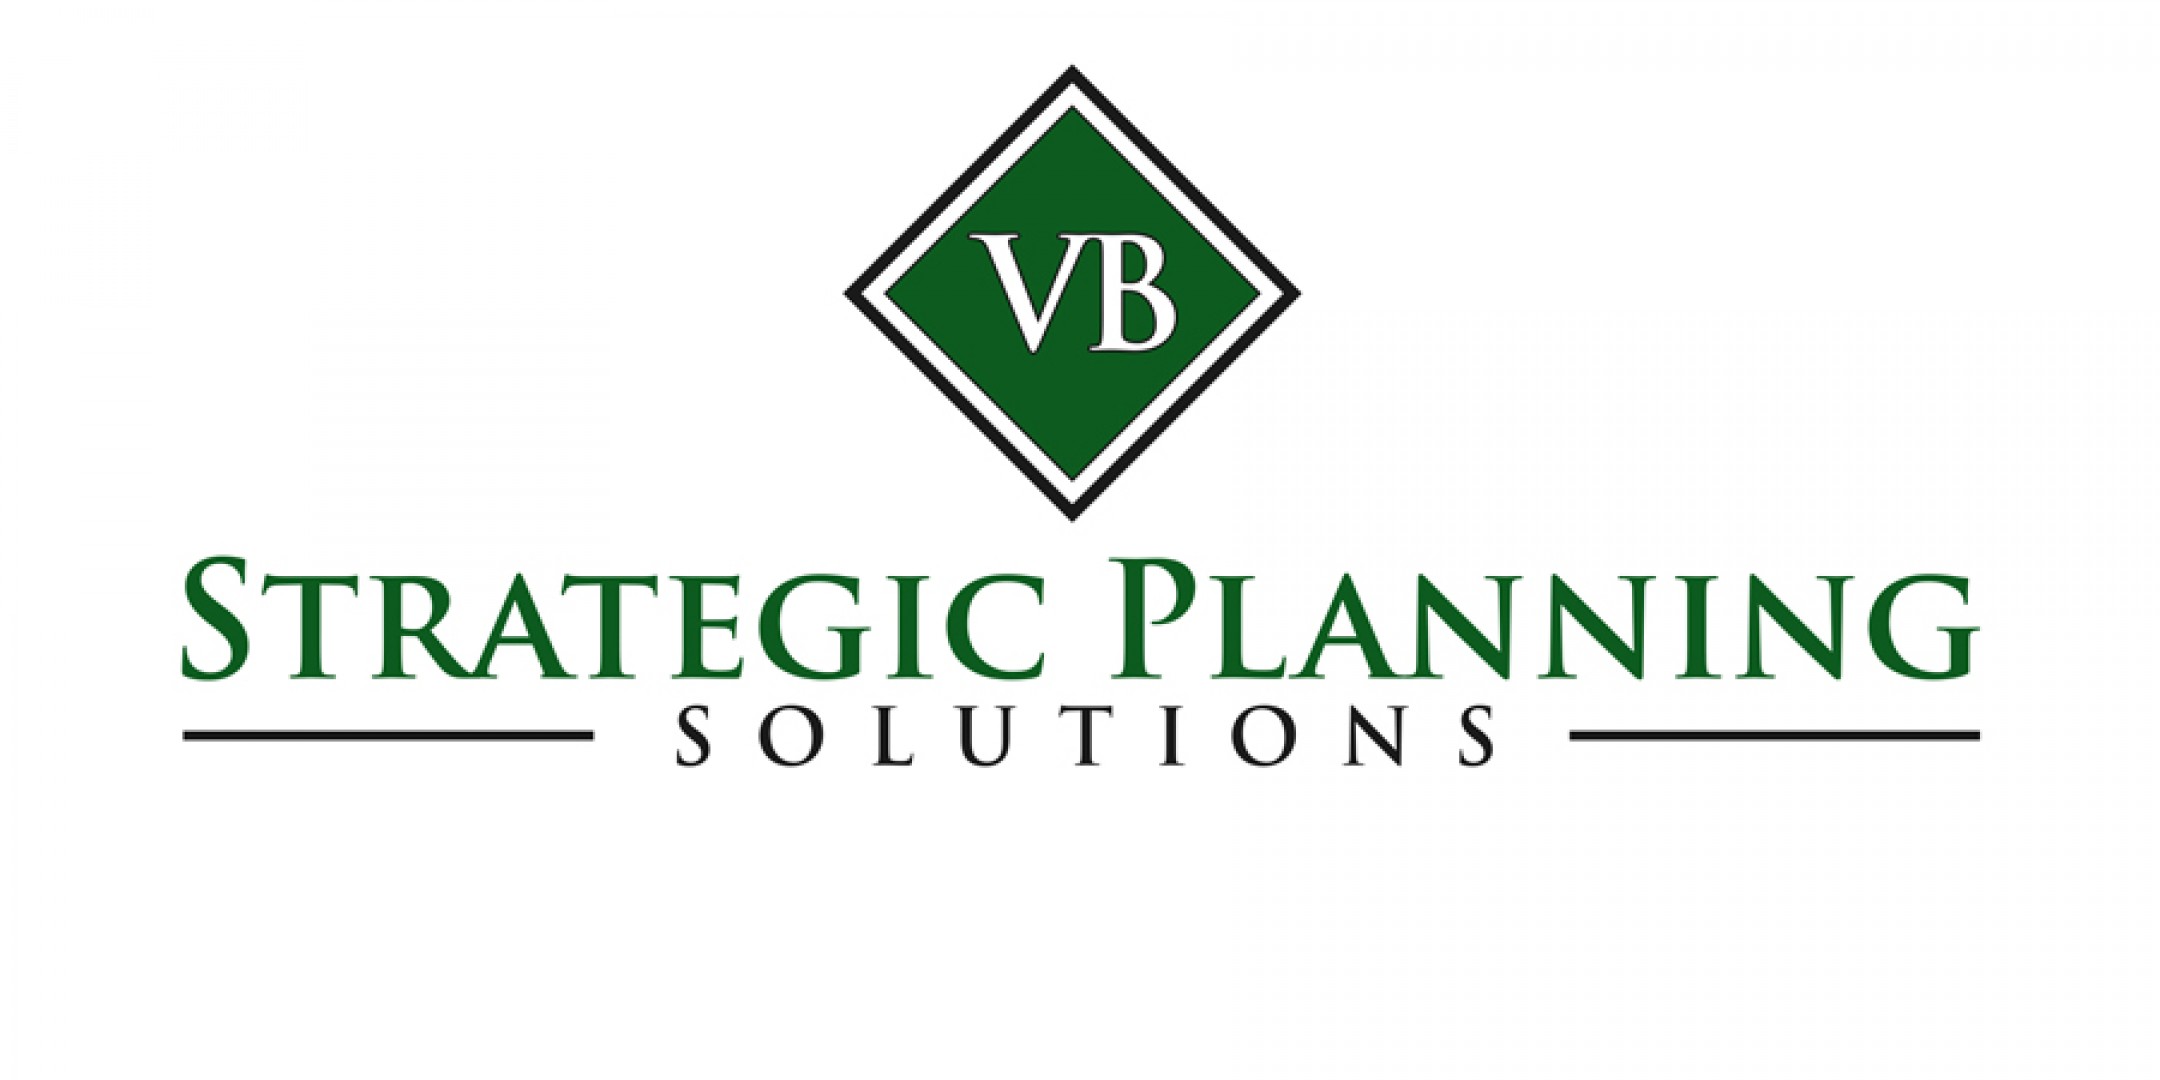 VB Strategic Planning Solutions